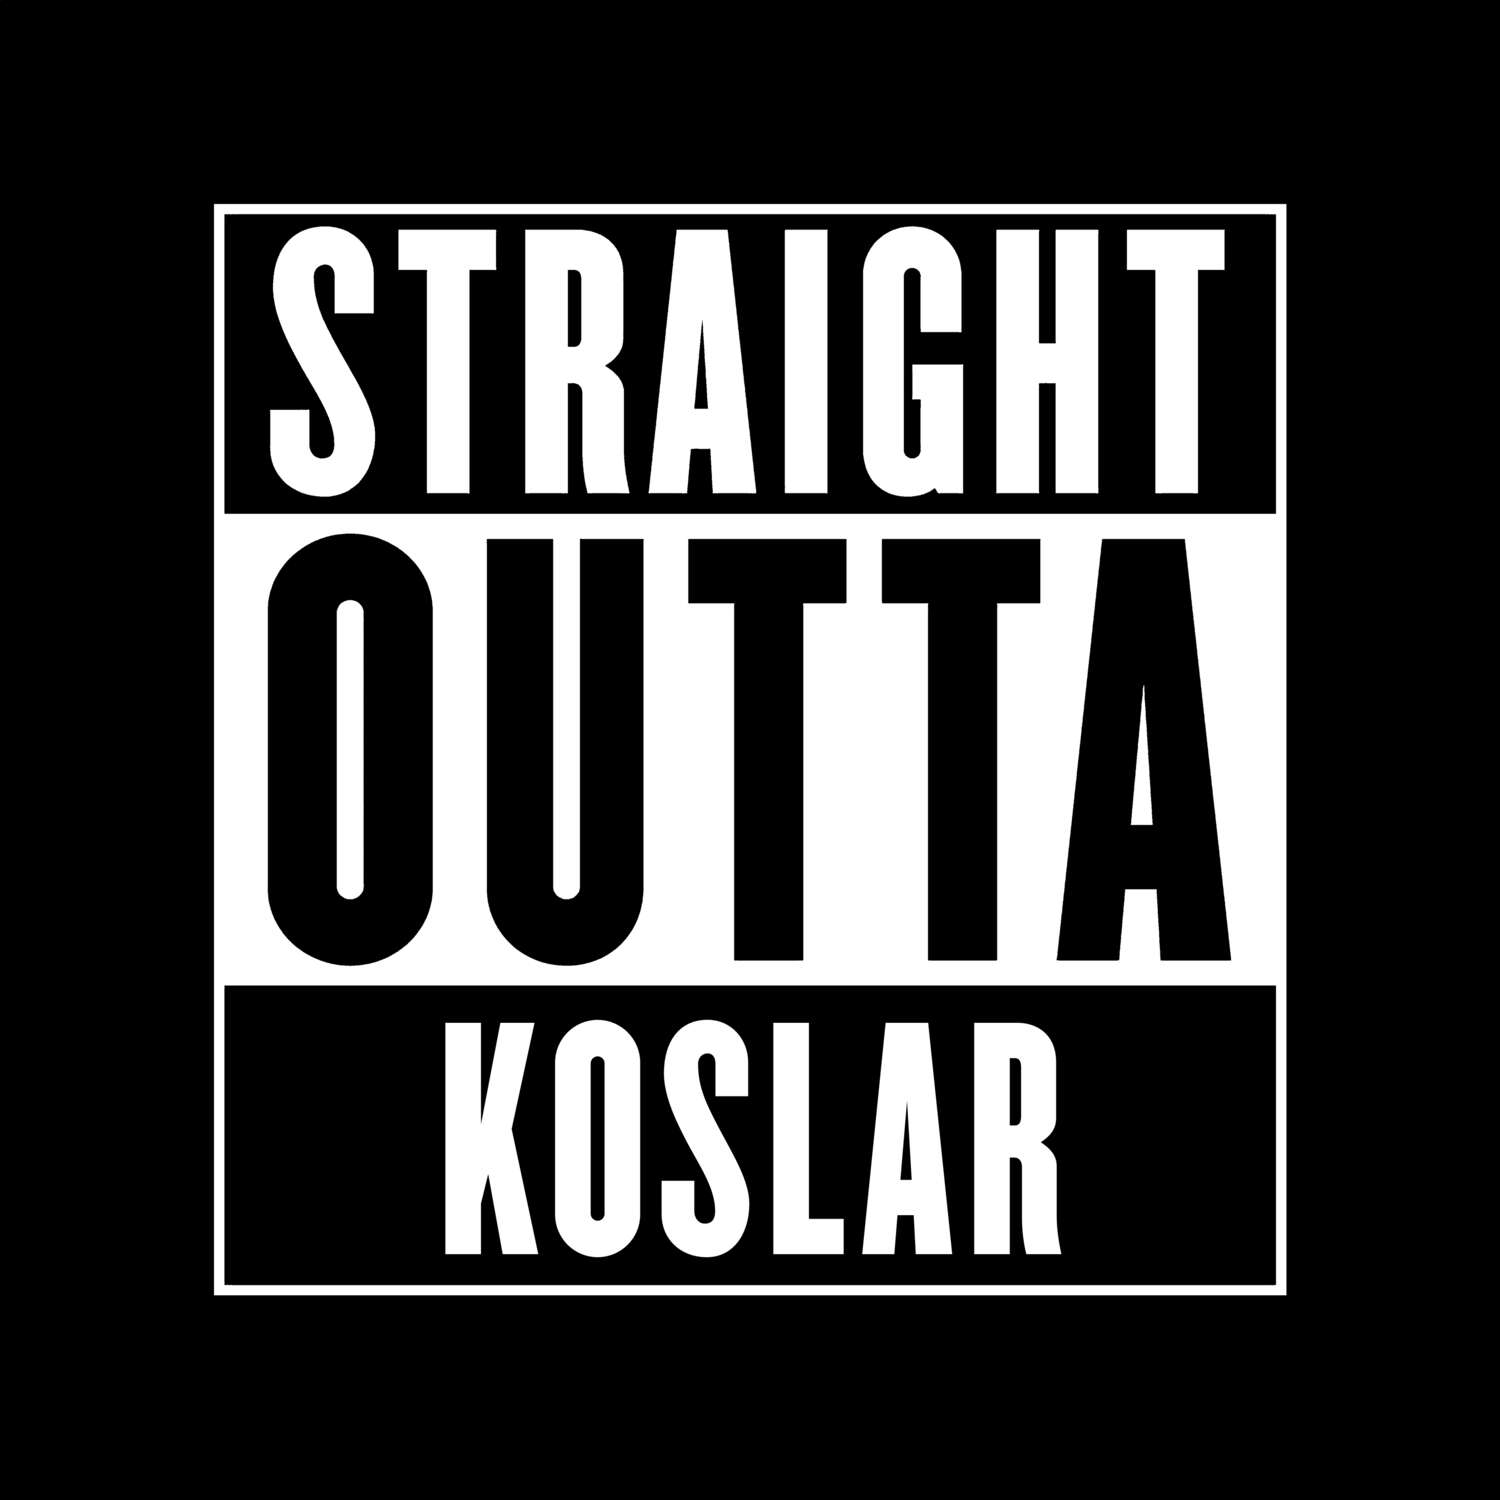 Koslar T-Shirt »Straight Outta«